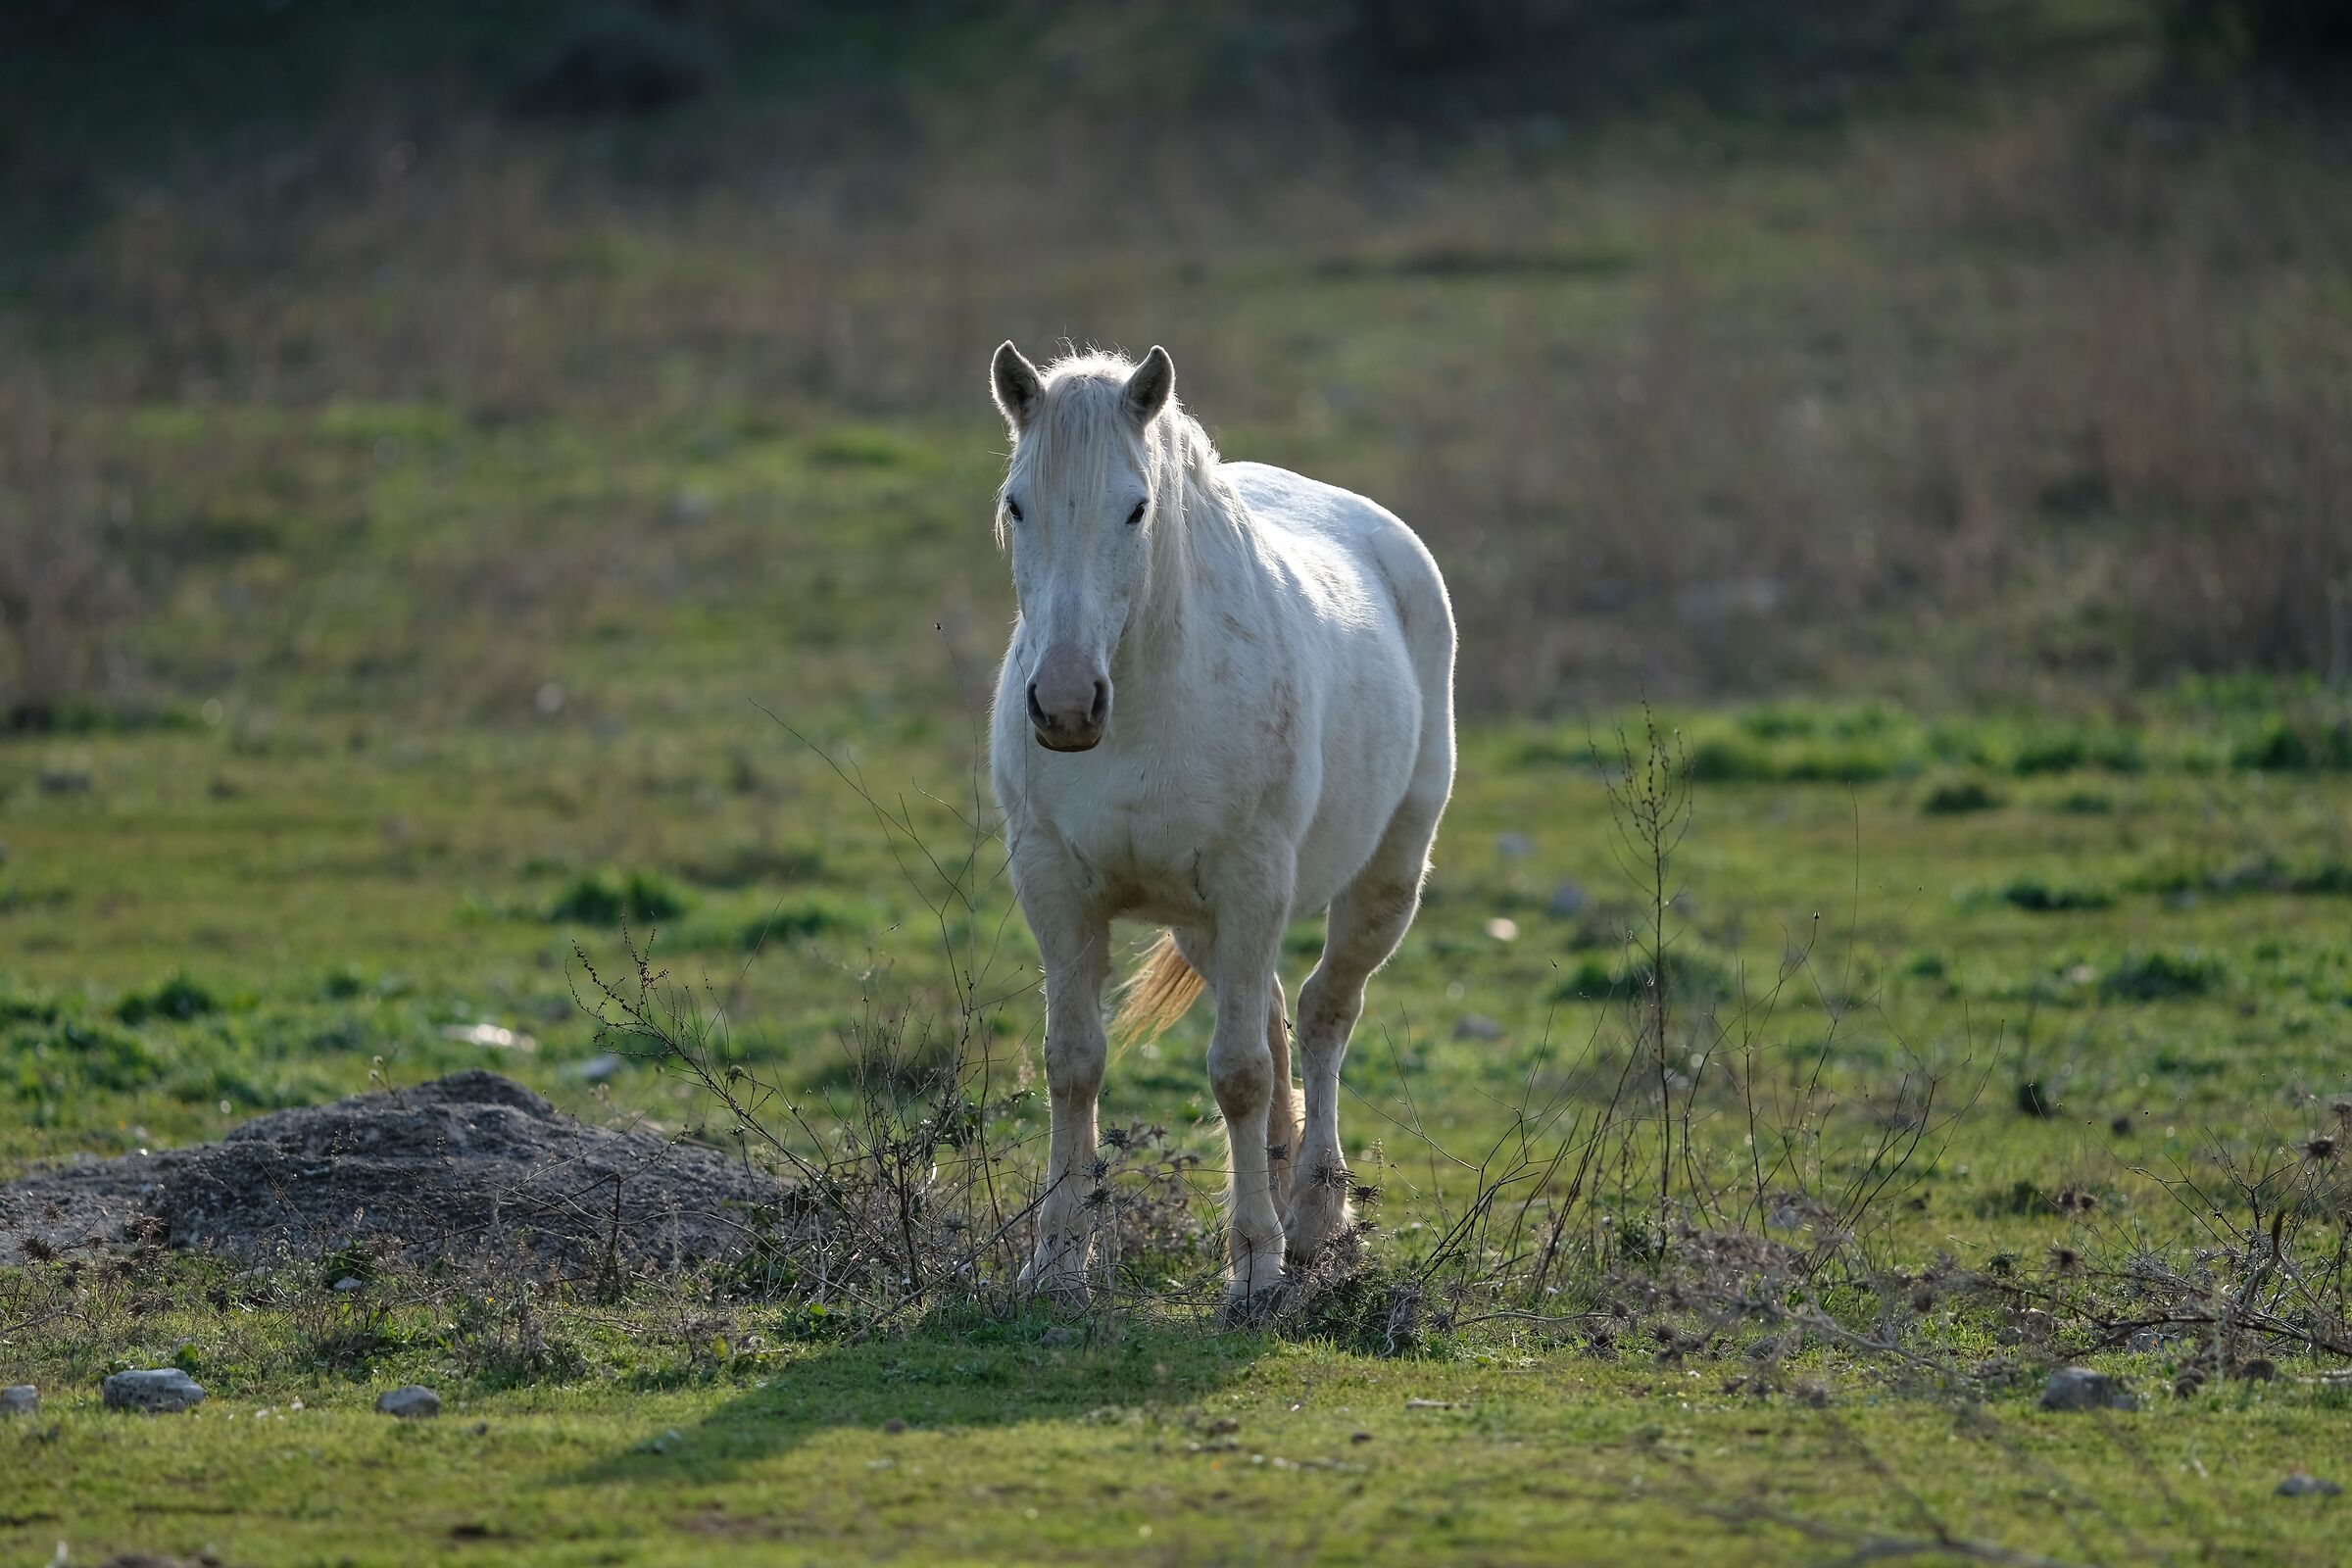 The White Horse...